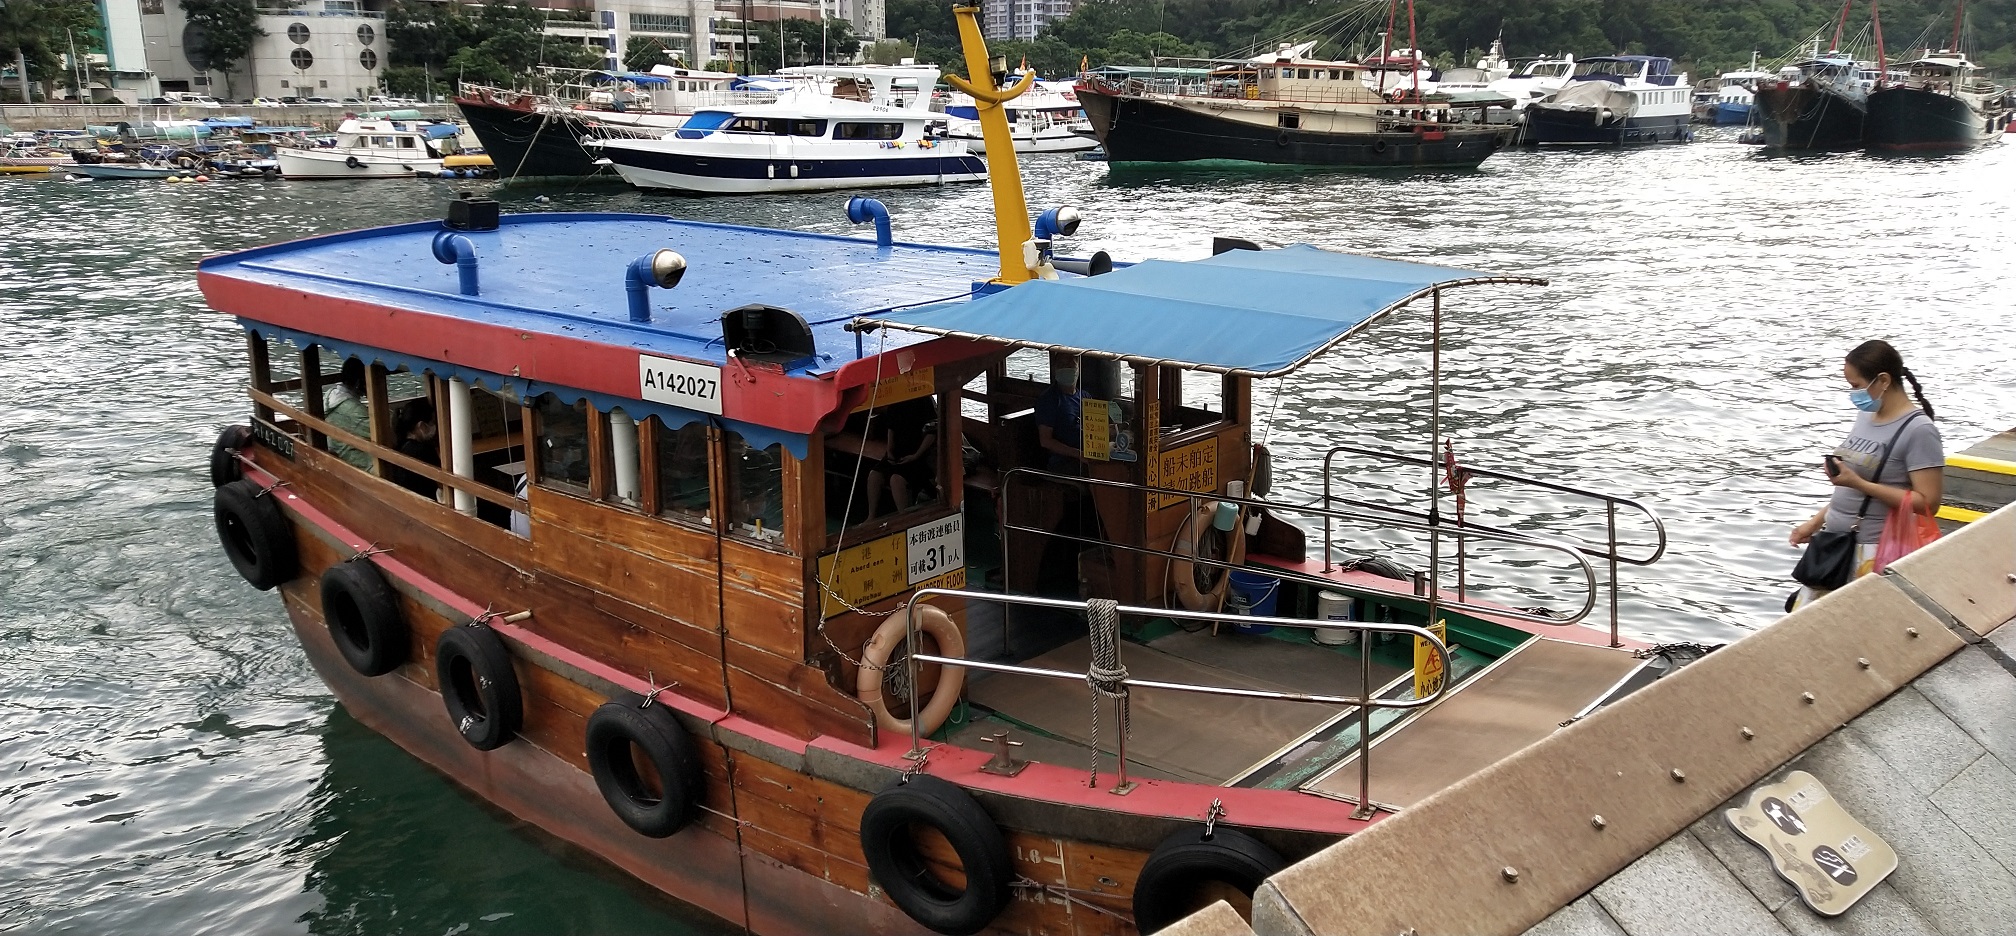 Passengers are boarding the sampan